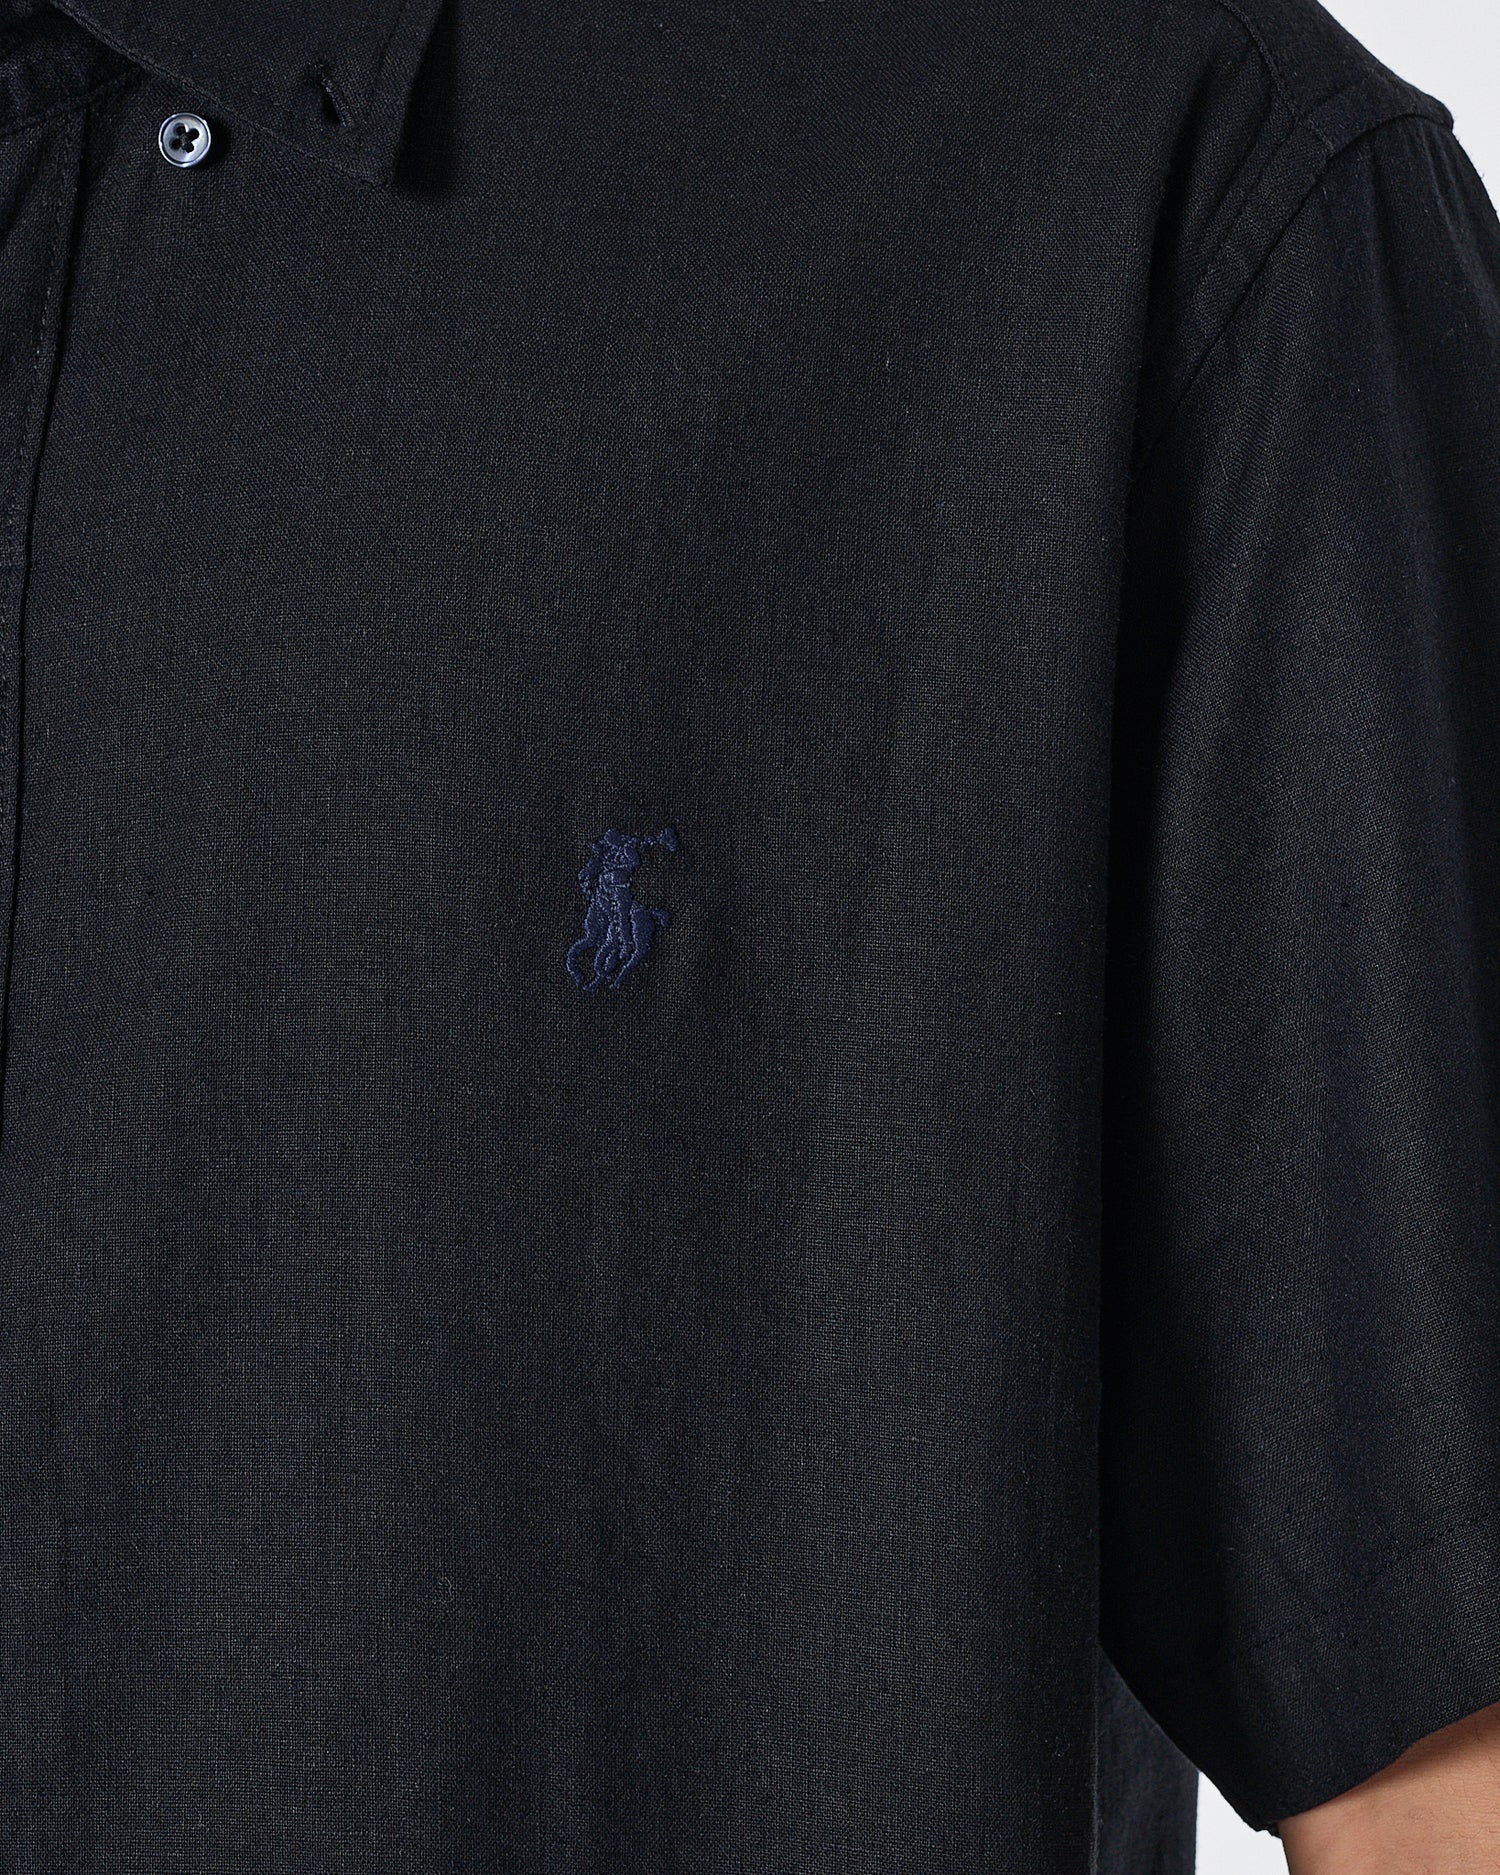 RL Casual Linen Men Black Shirts Short Sleeve 20.90